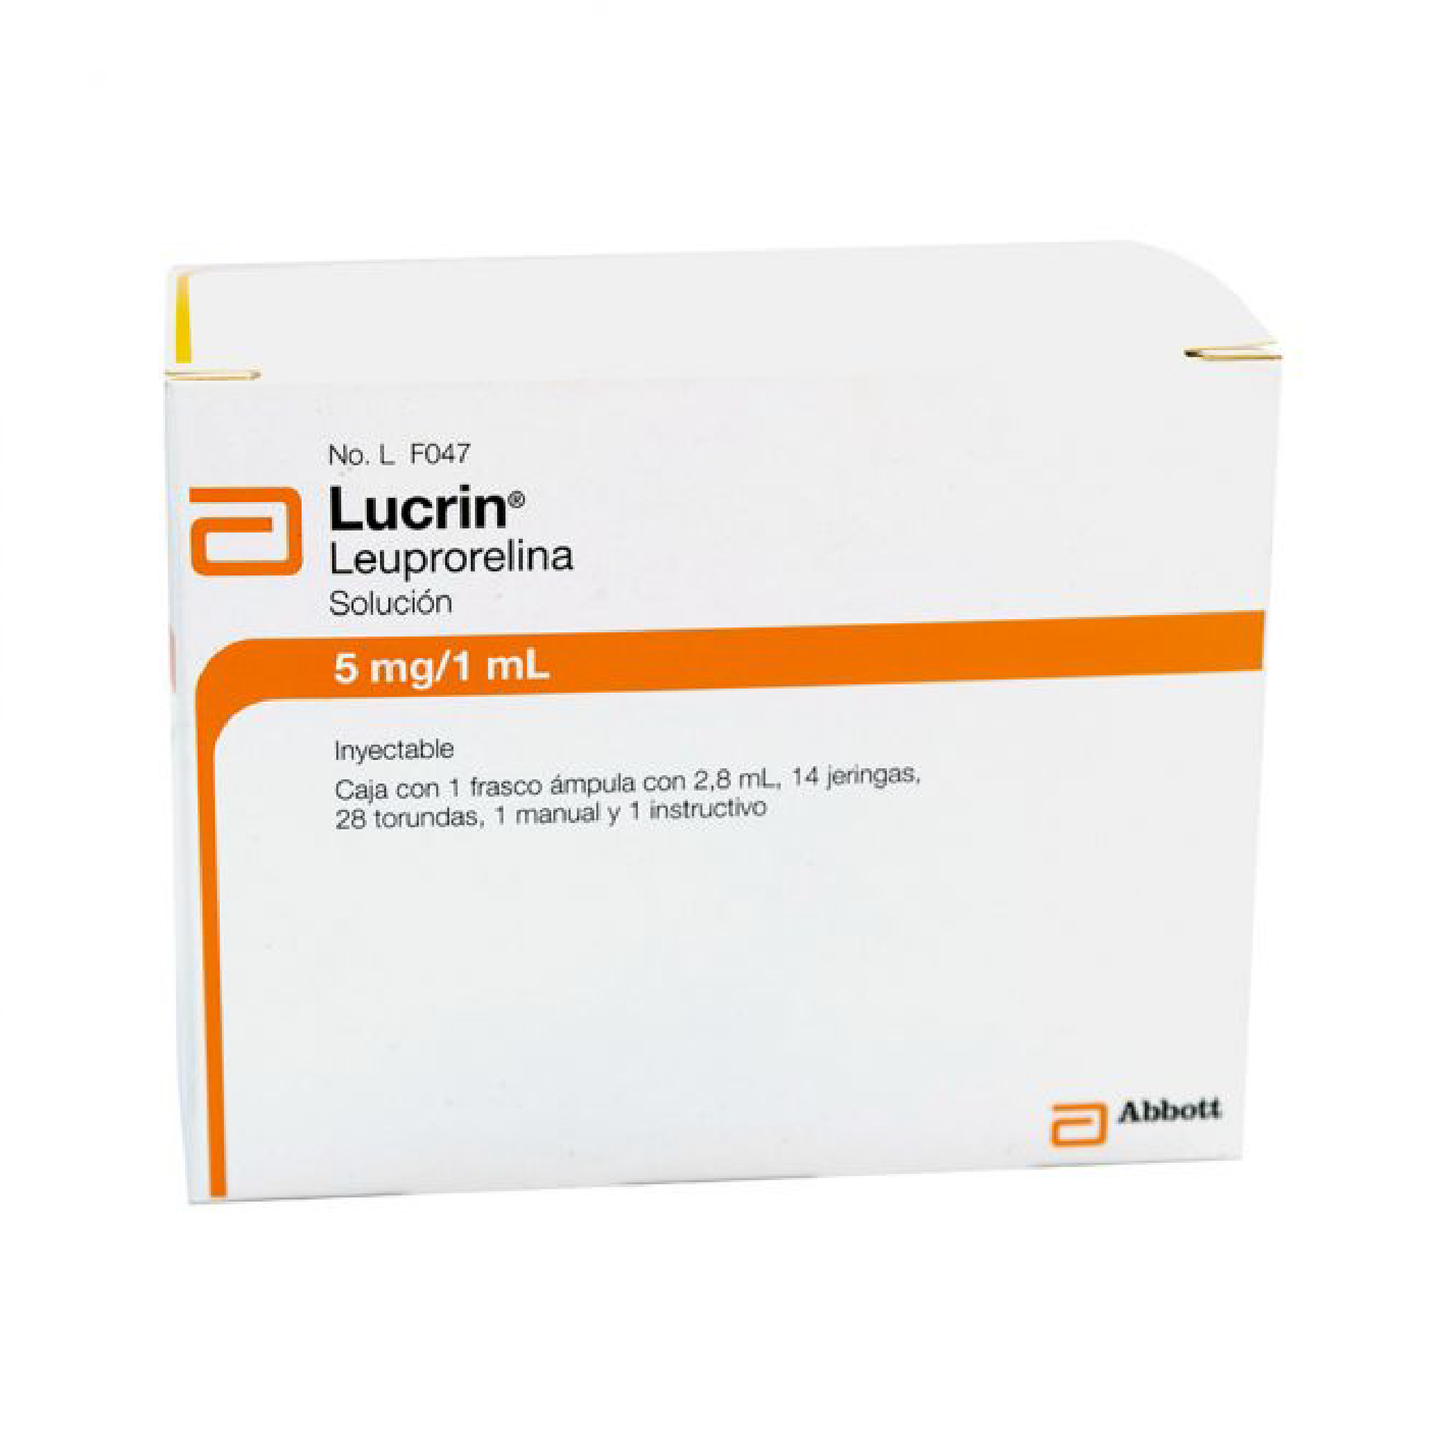 Lucrin 5mg/1ml